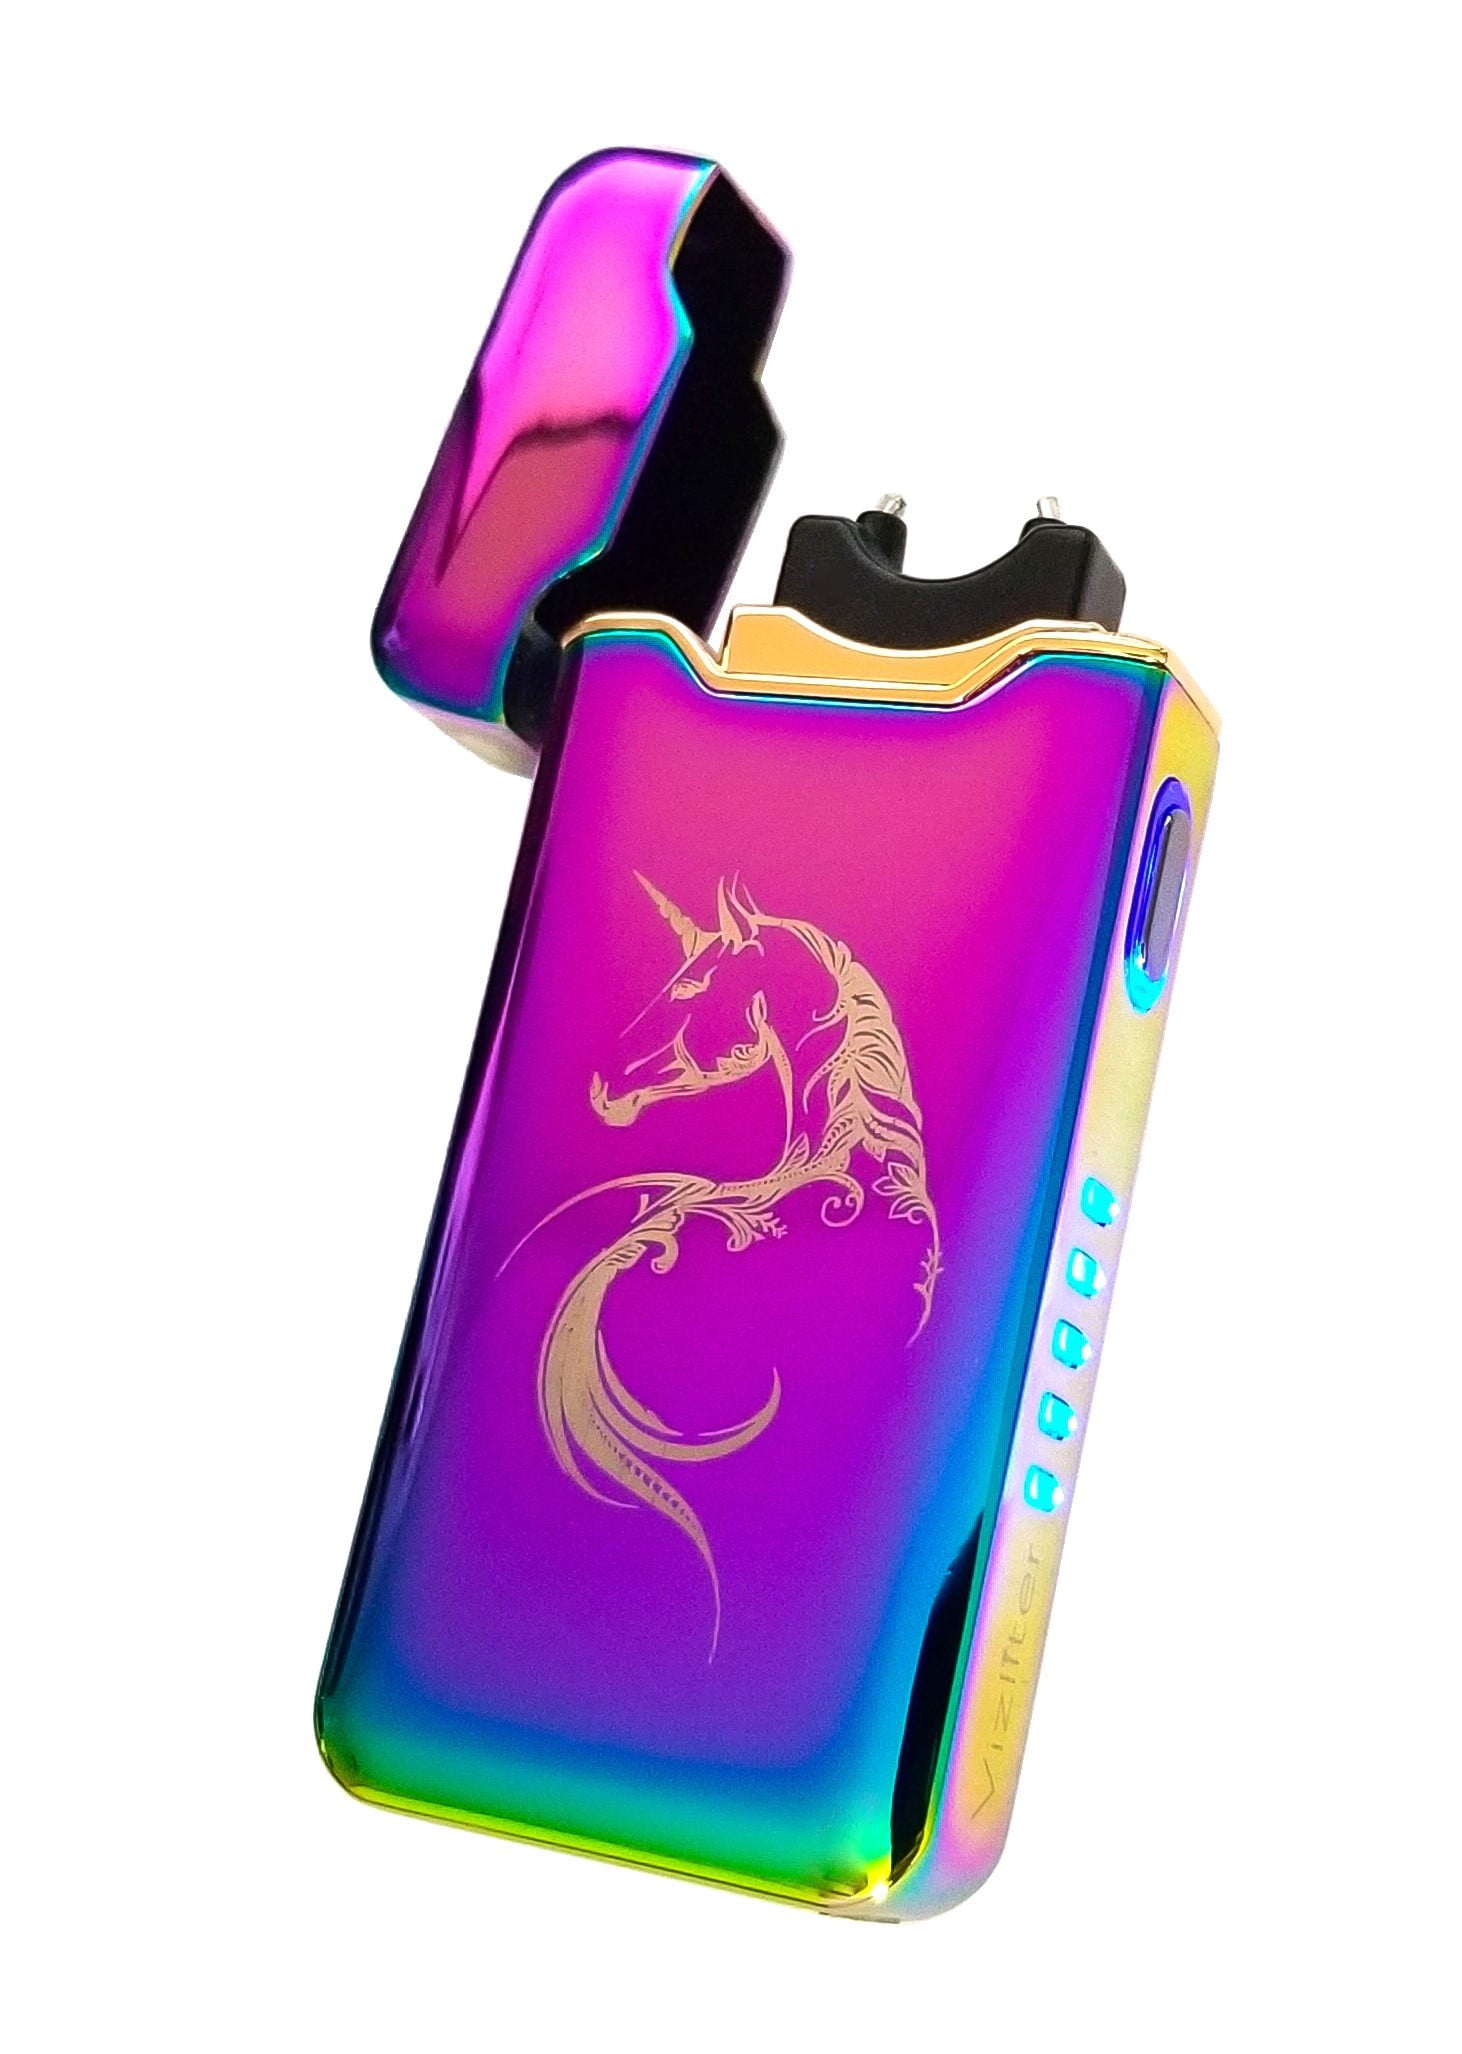 Vizliter Electronic Super Arc Lighter, Electric Lighter Rechargeable Flameless Elegant Slick Design Windproof and Splashproof Rainbow Unicorn